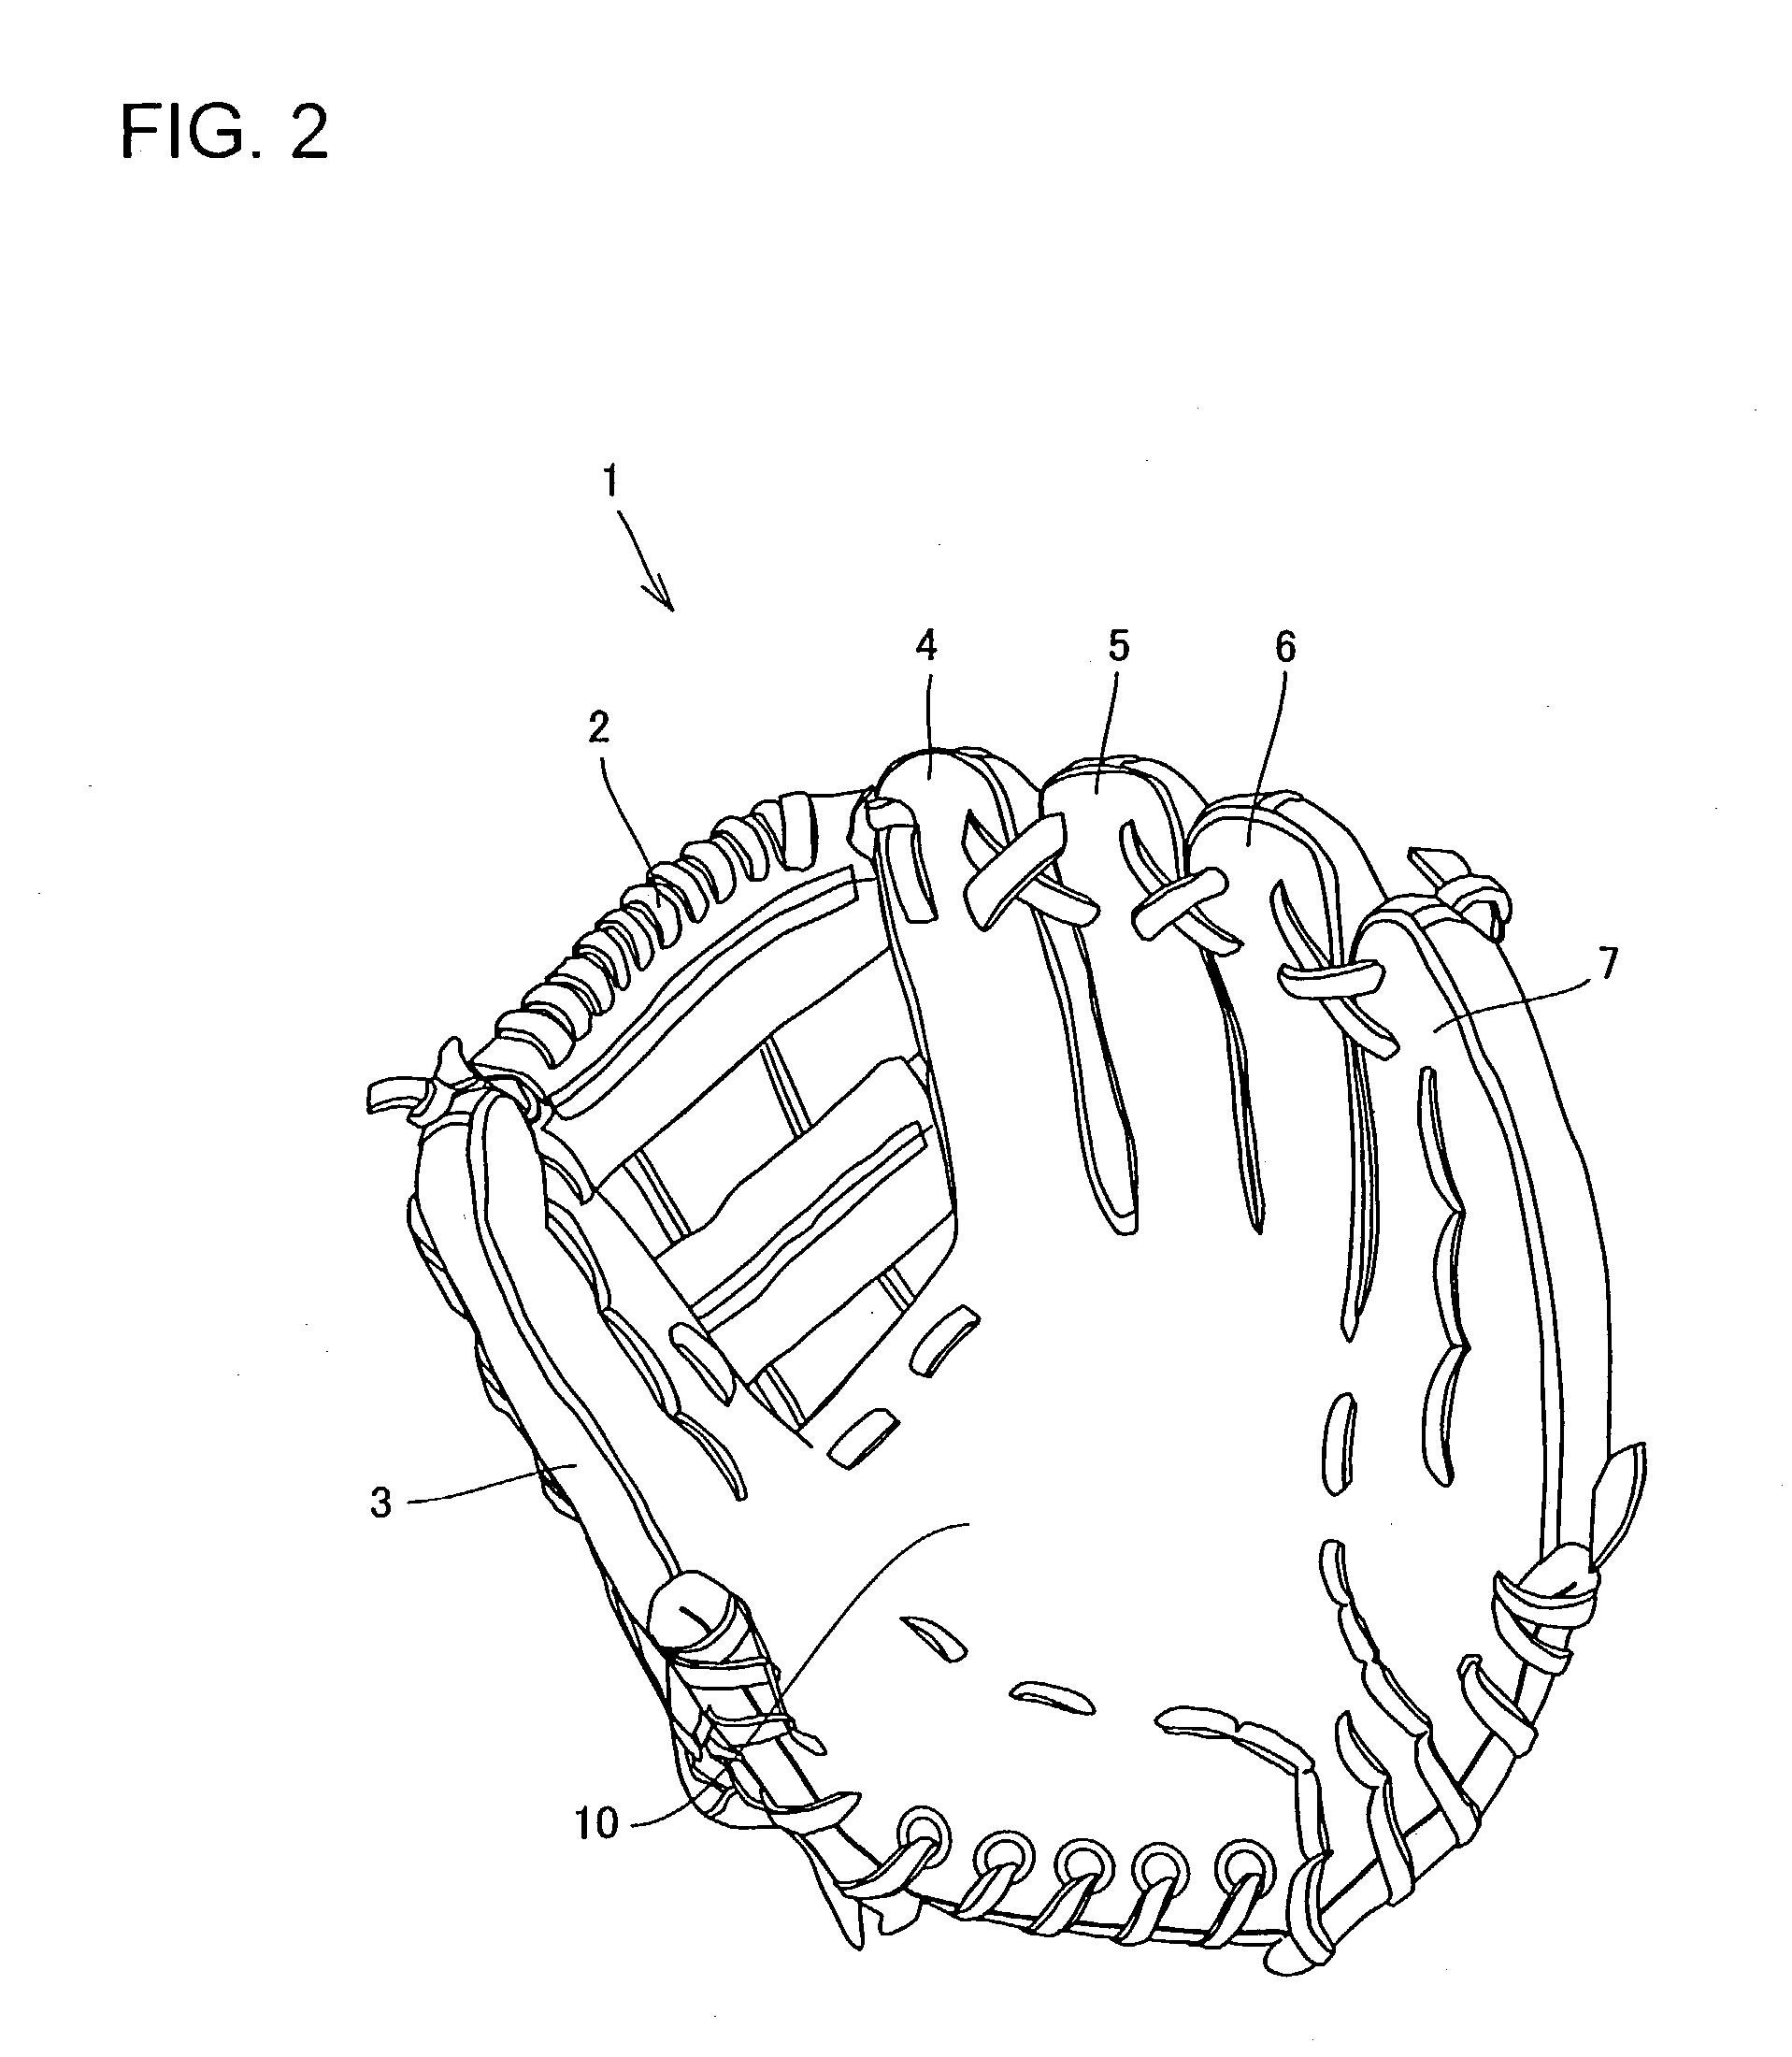 Glove for baseball or softball